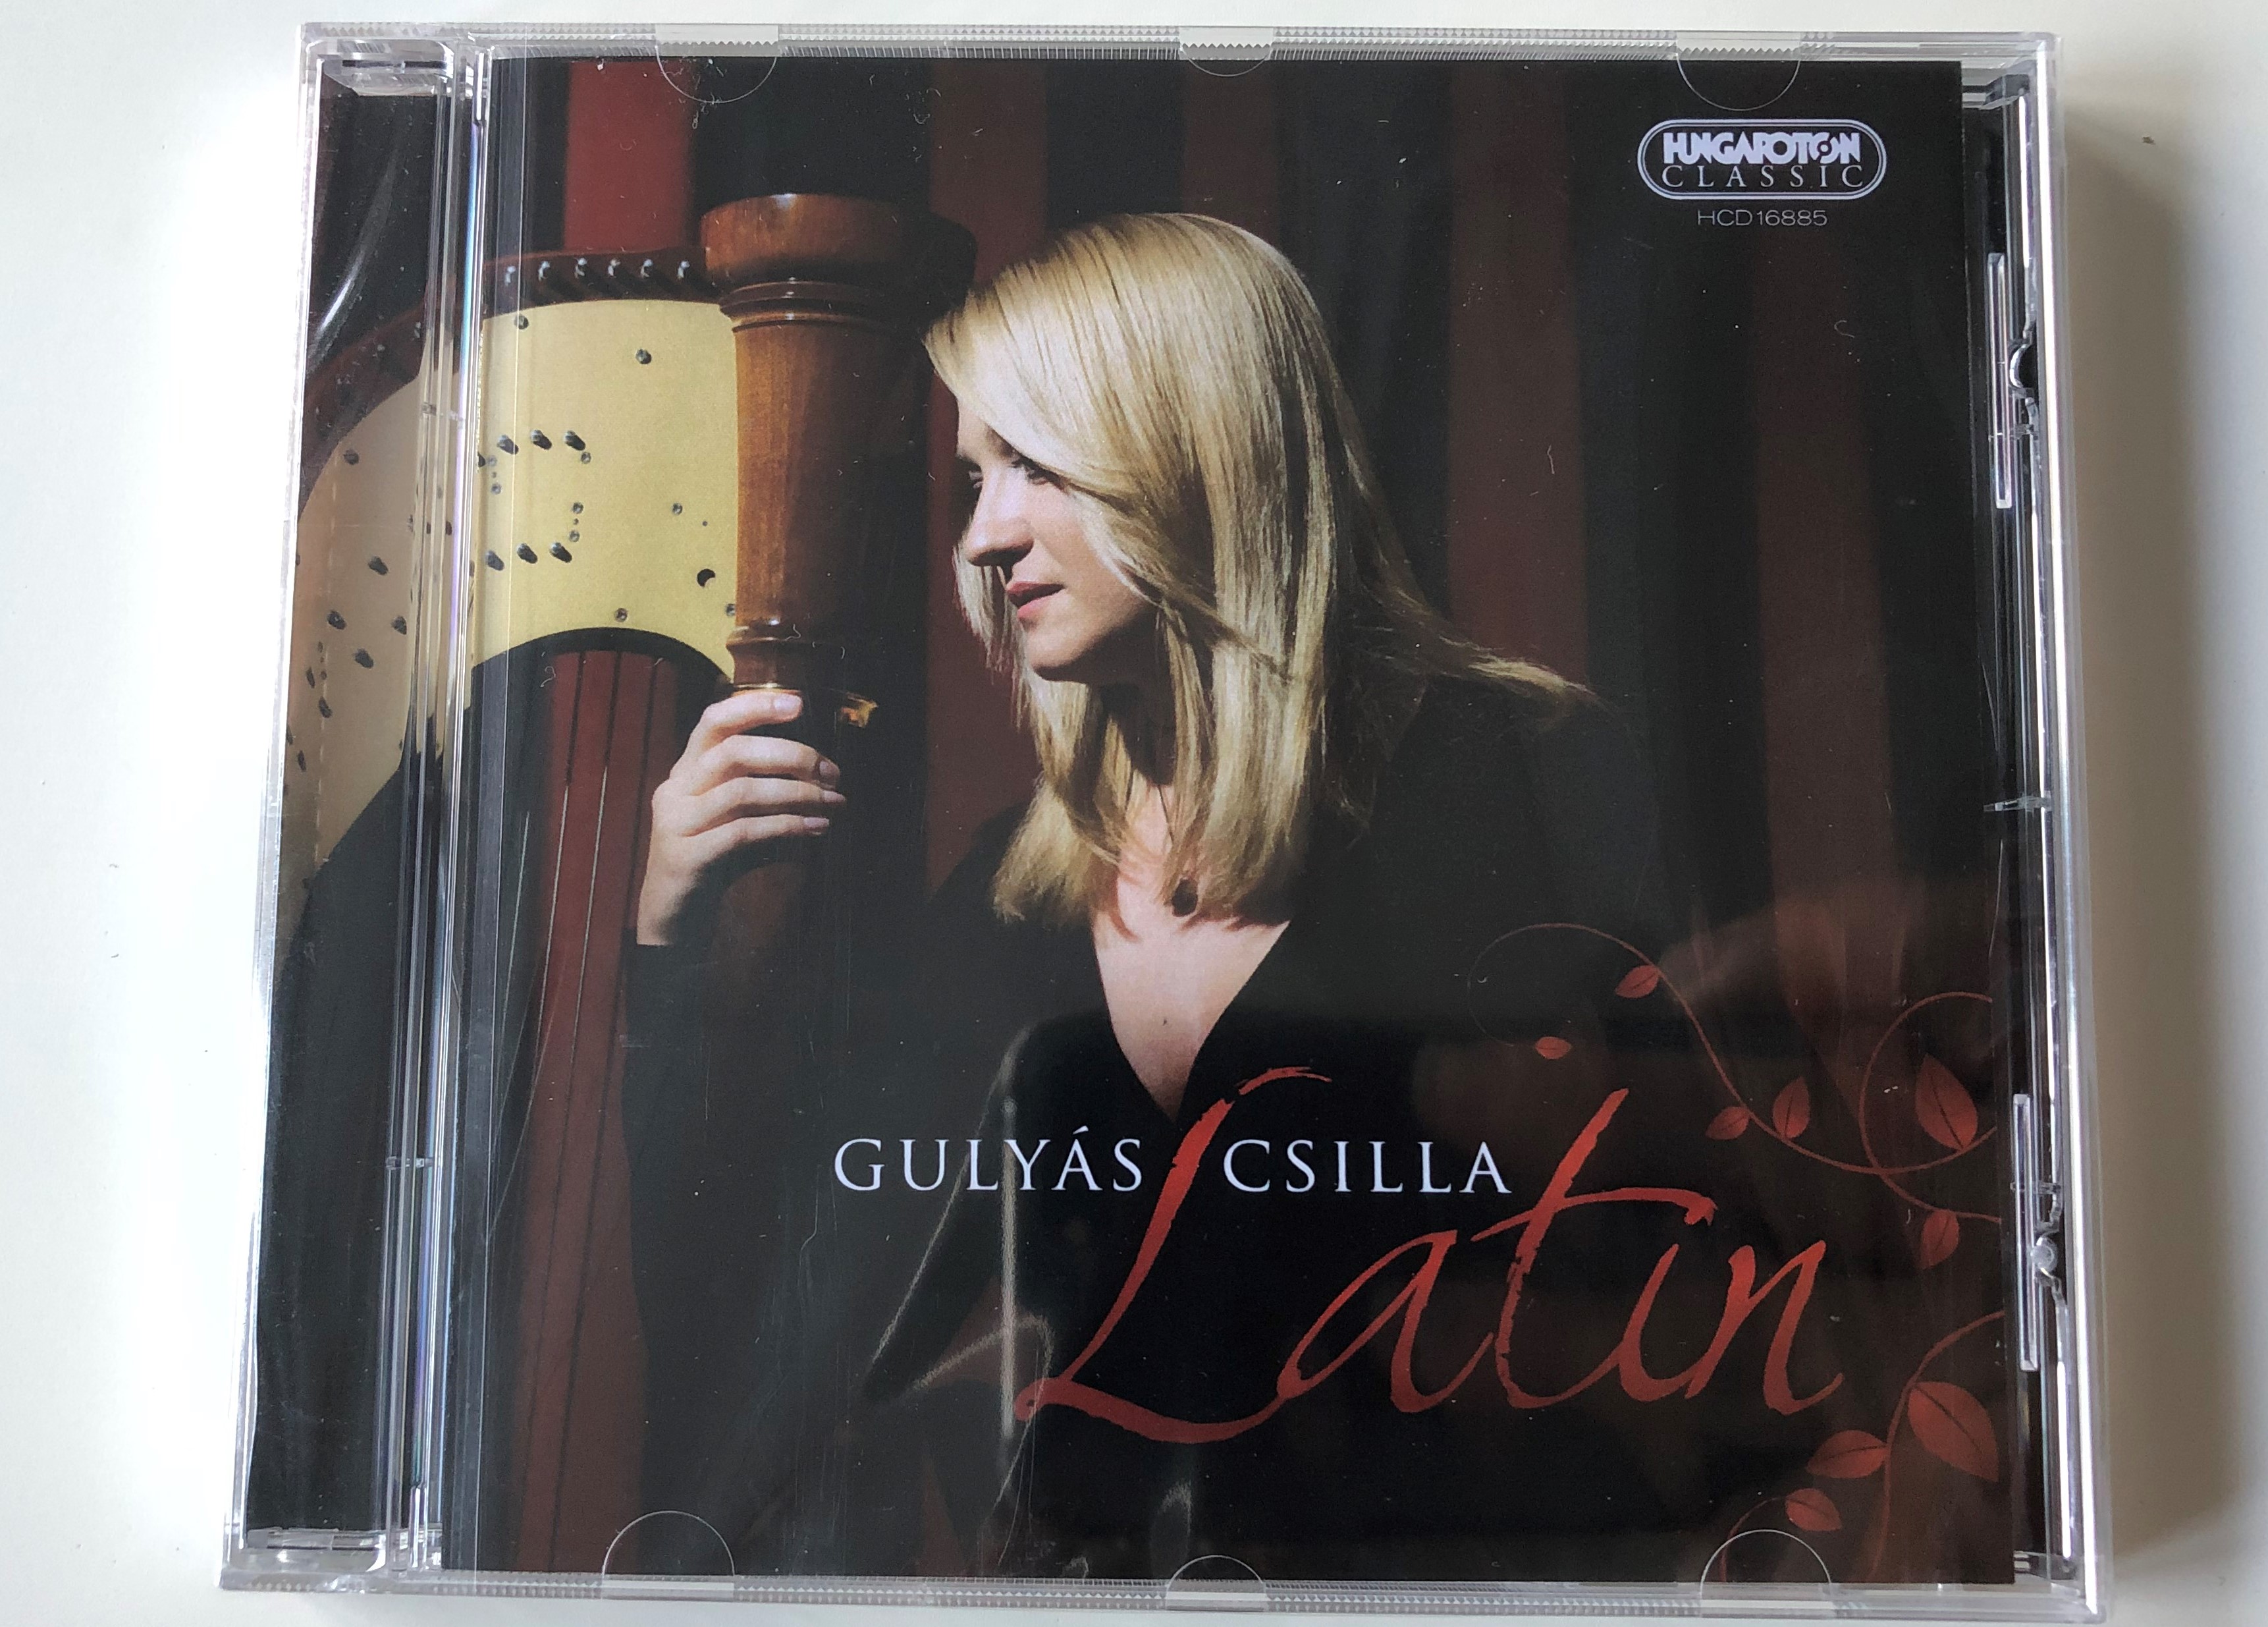 gulyas-csilla-latin-hungaroton-classic-audio-cd-2007-hcd-16885-1-.jpg